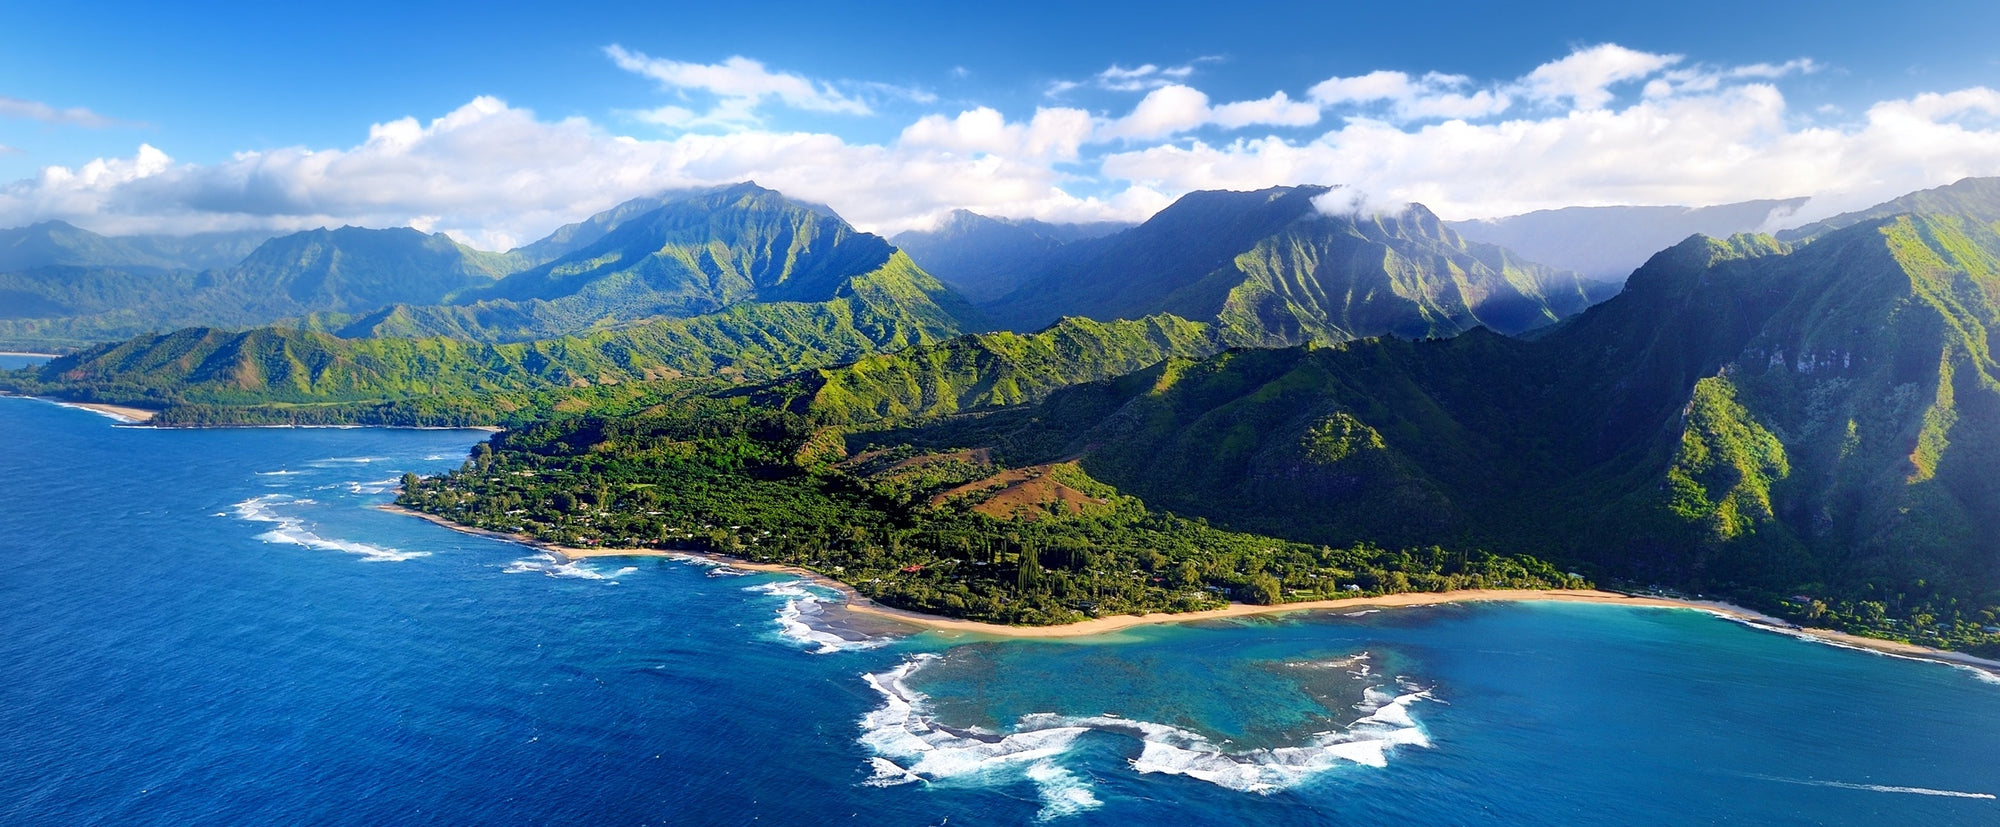 Wide view of a Hawaiian Island